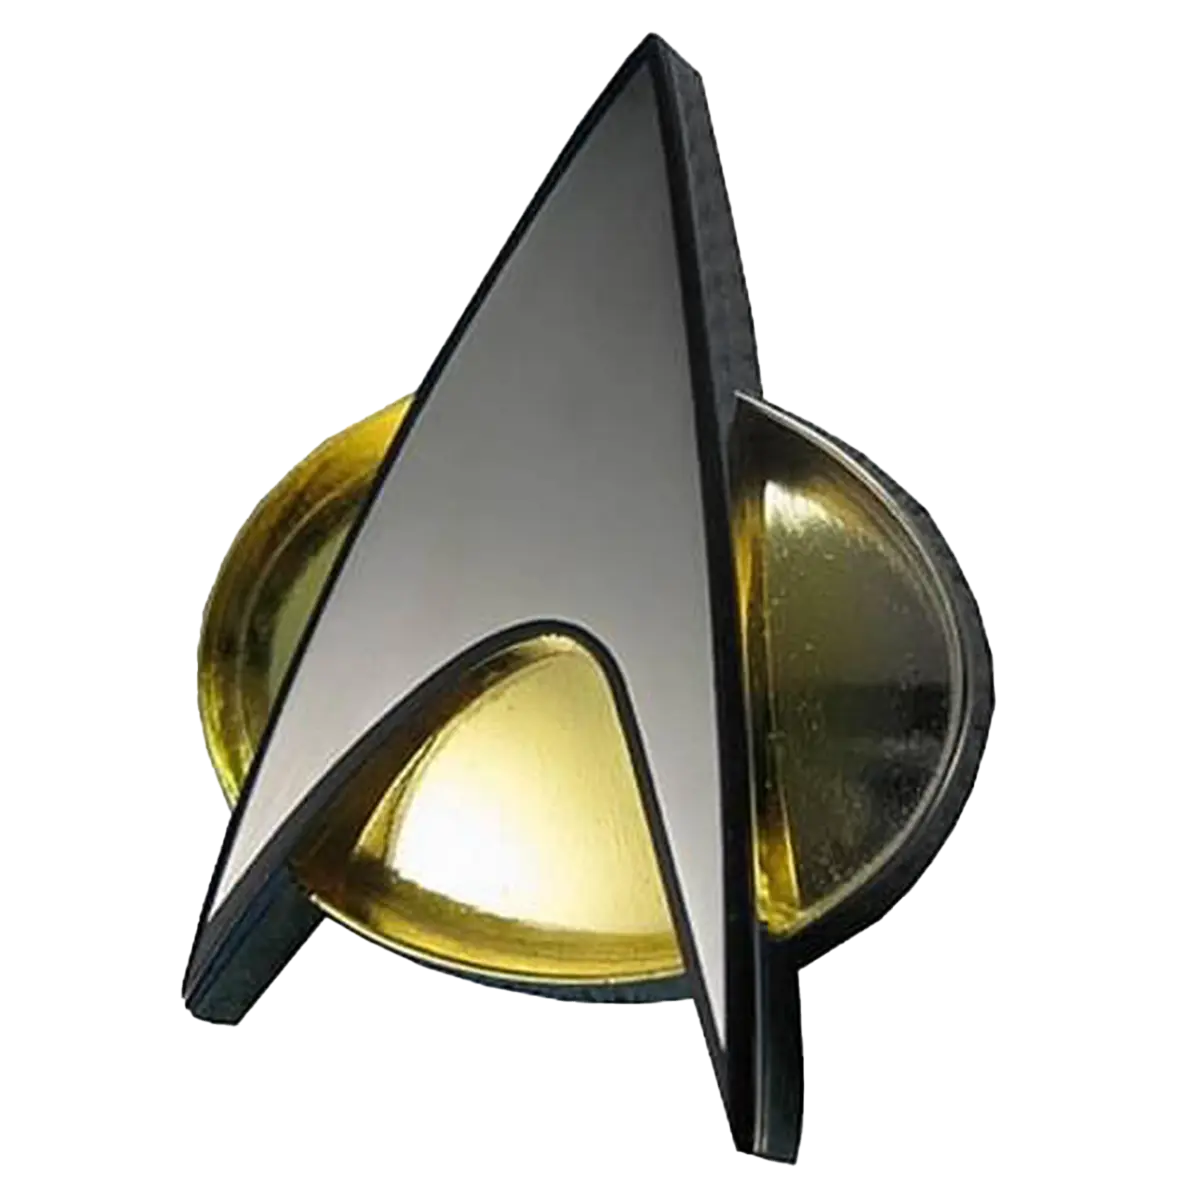 Star Trek The Next Generation Communicator Badge Replica